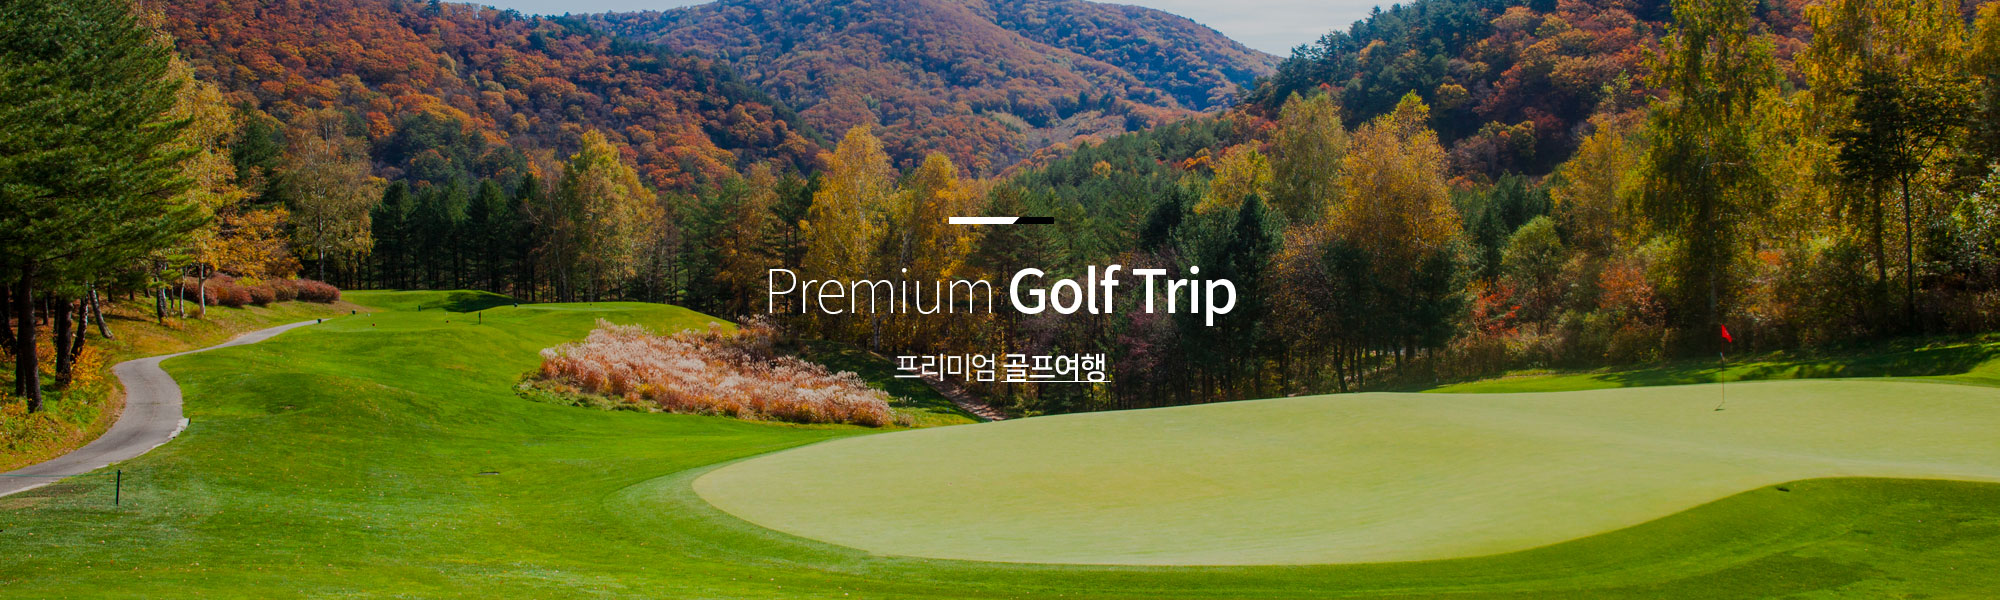 Premium Golf Trip 프리미엄 골프여행